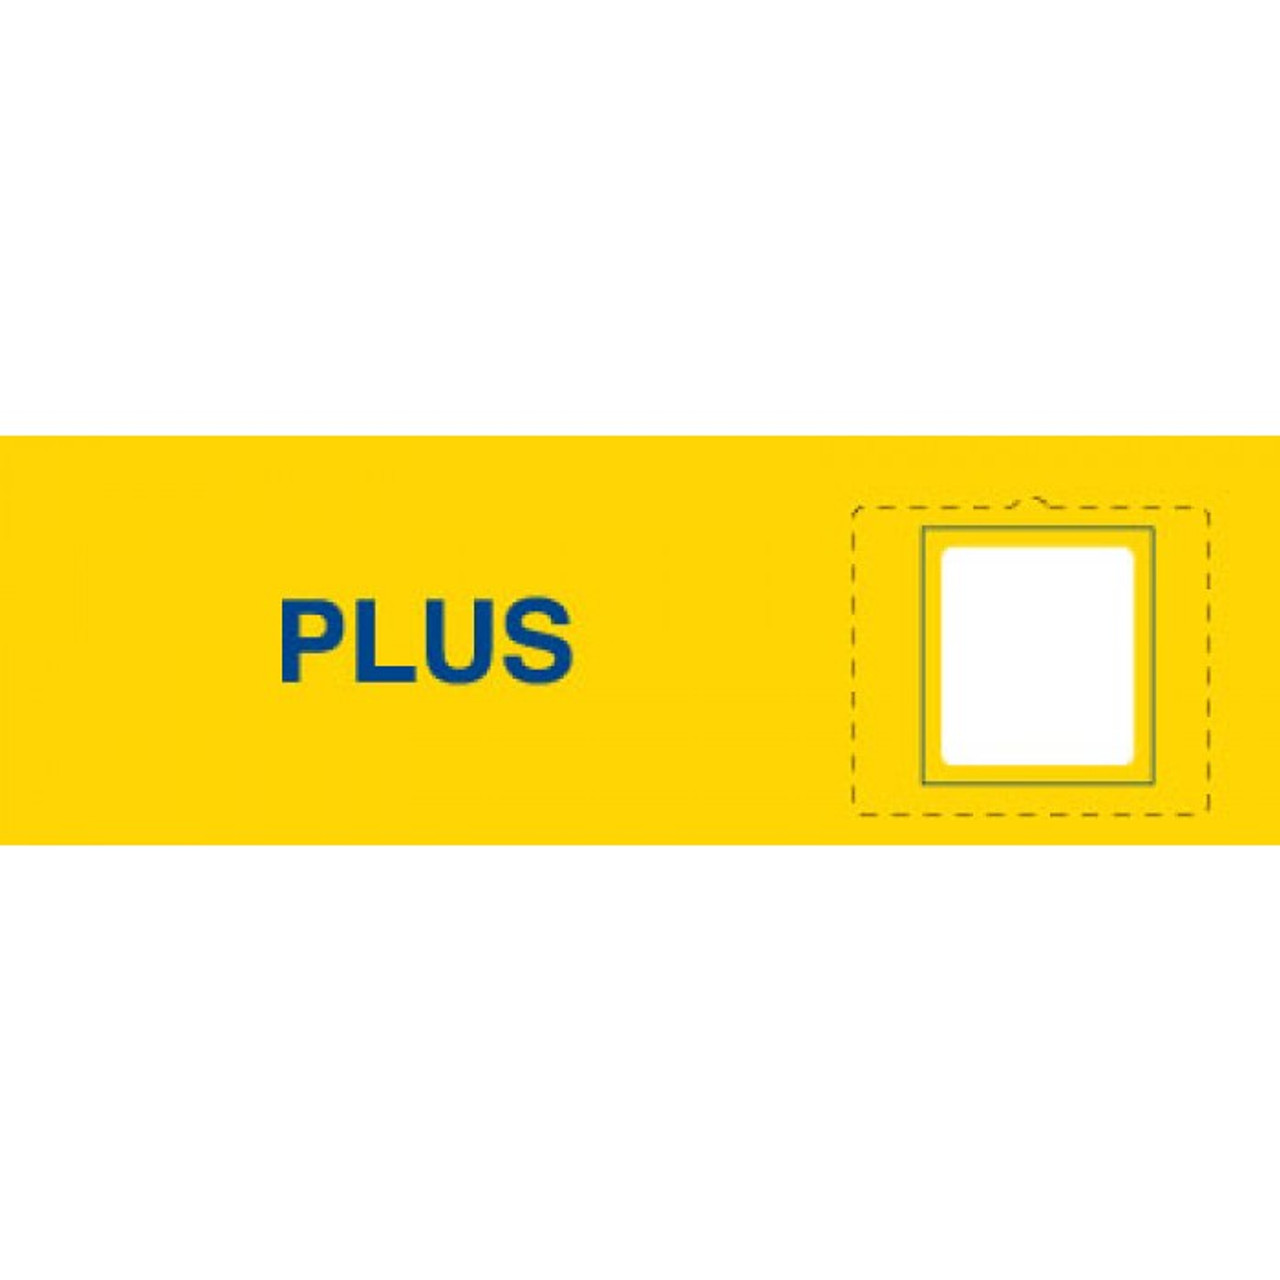 VPD-SH-PLU - Vista Product ID Shell Plus Overlay